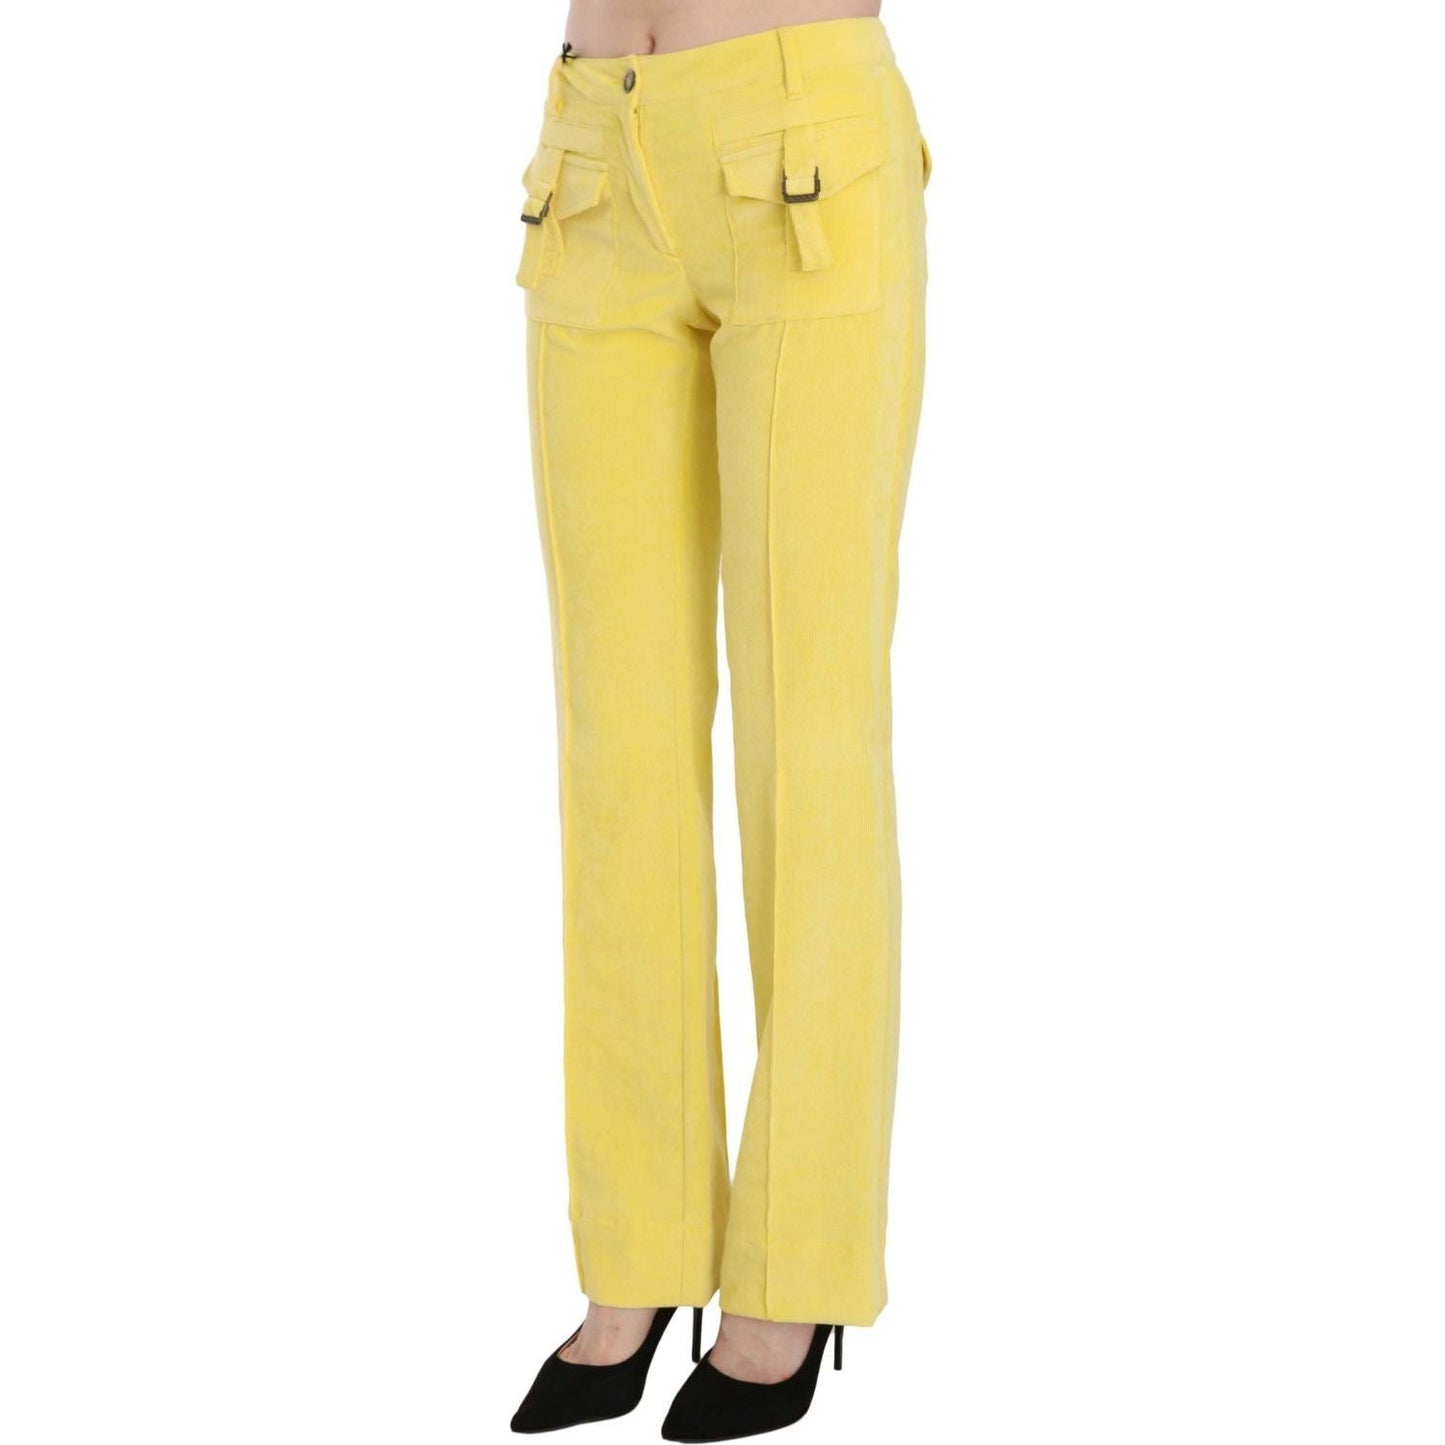 Just Cavalli Chic Yellow Corduroy Mid Waist Pants yellow-corduroy-mid-waist-straight-trousers-pants IMG_5595-scaled-c903dd82-8c4.jpg